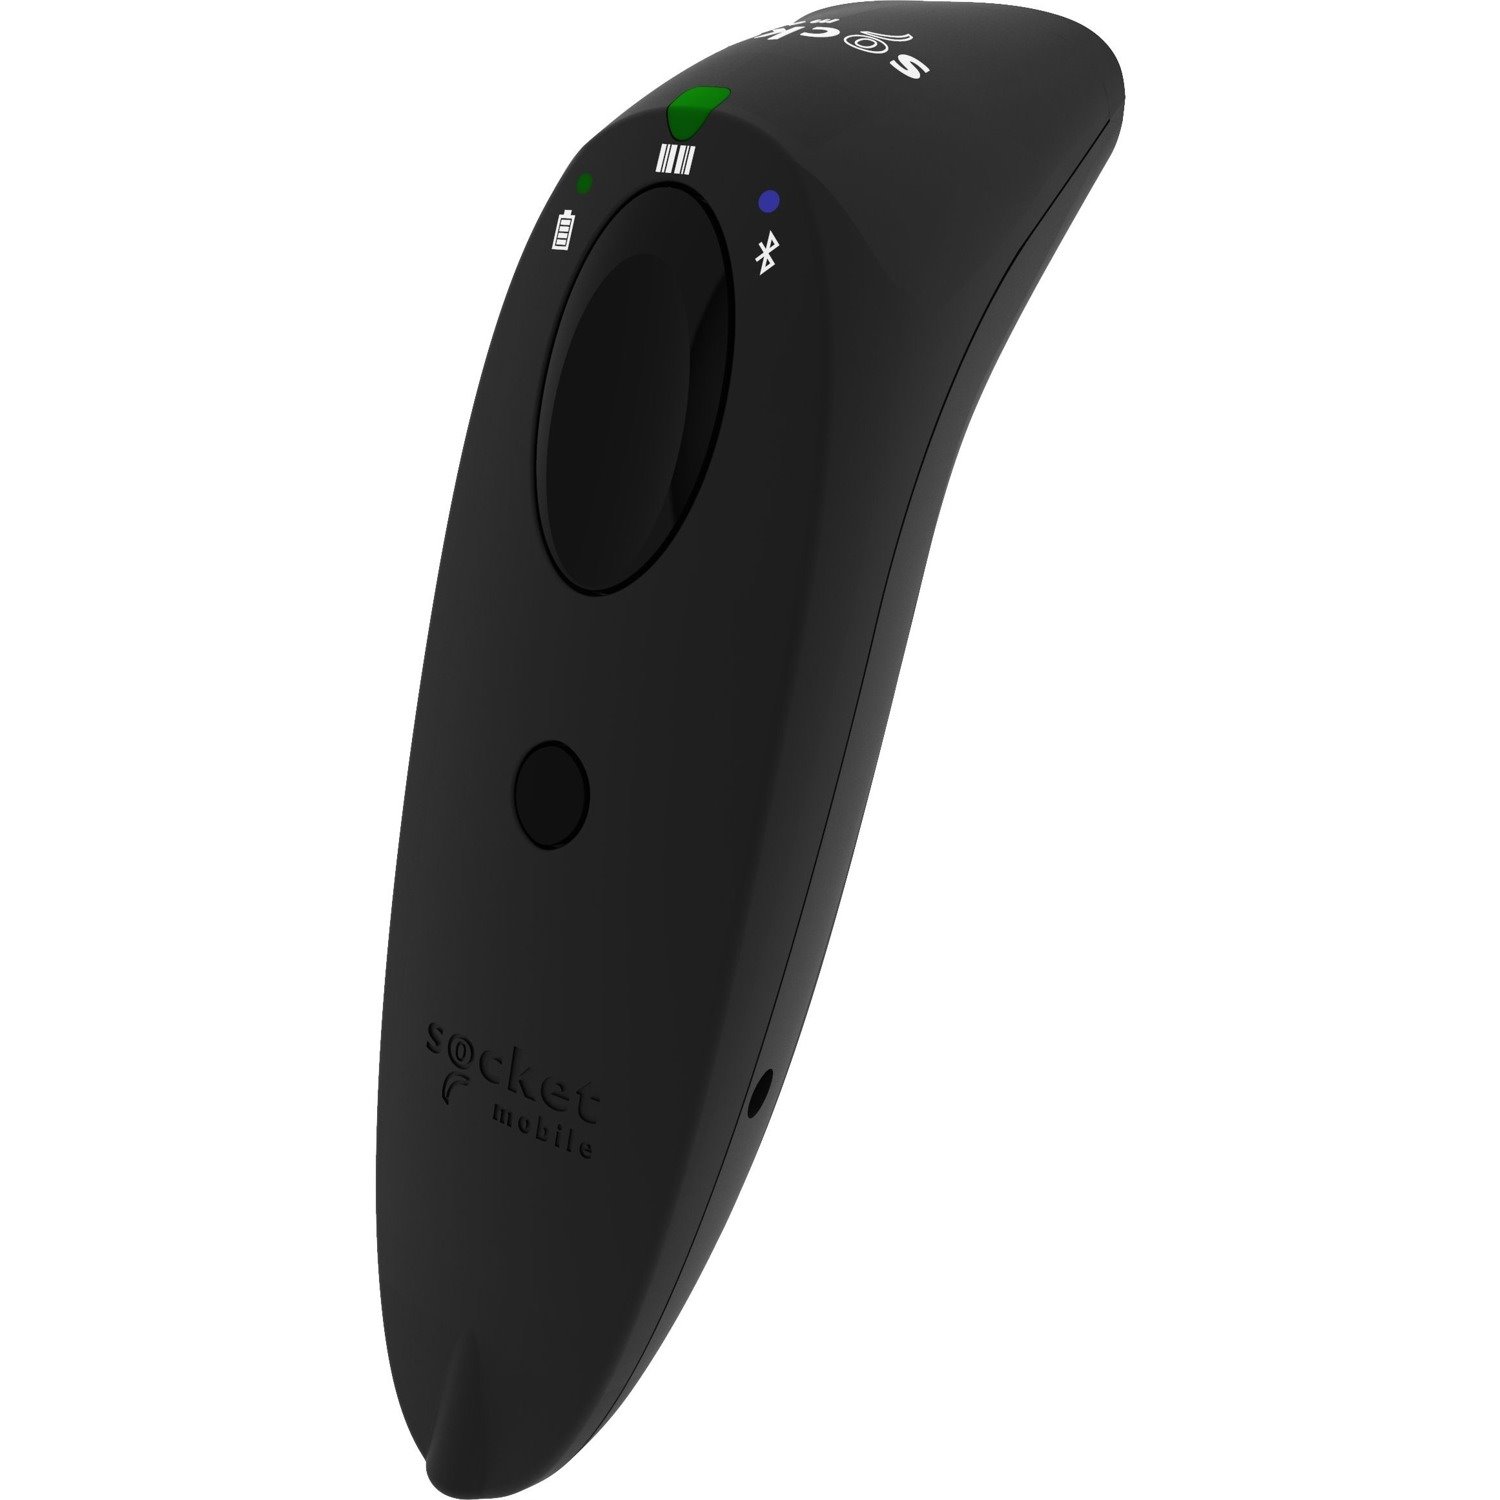 Socket Mobile SocketScan S720 Handheld Barcode Scanner - Wireless Connectivity - Black